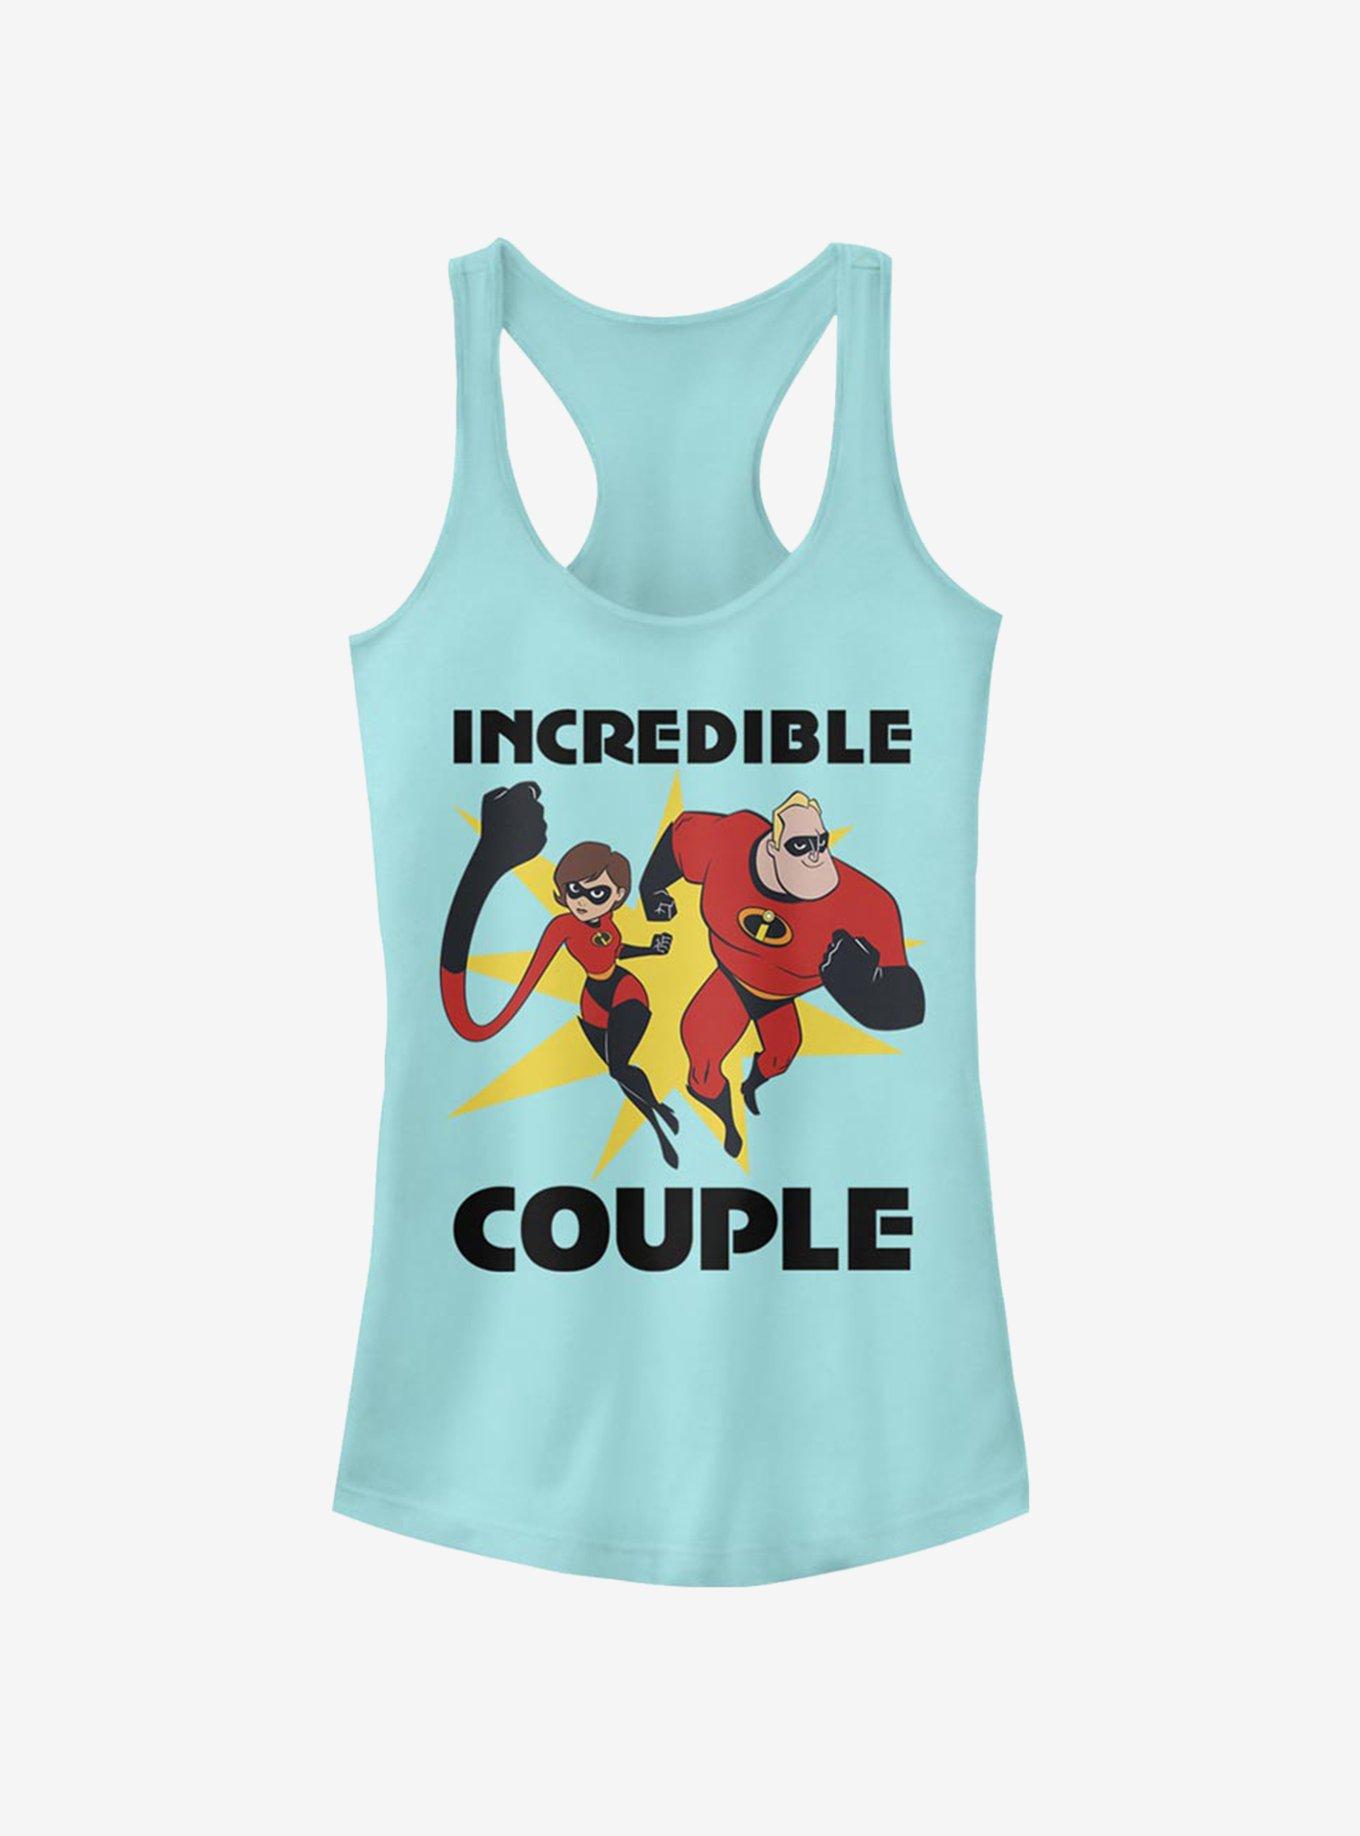 Disney Pixar The Incredibles Incredible Couple Girls Tank